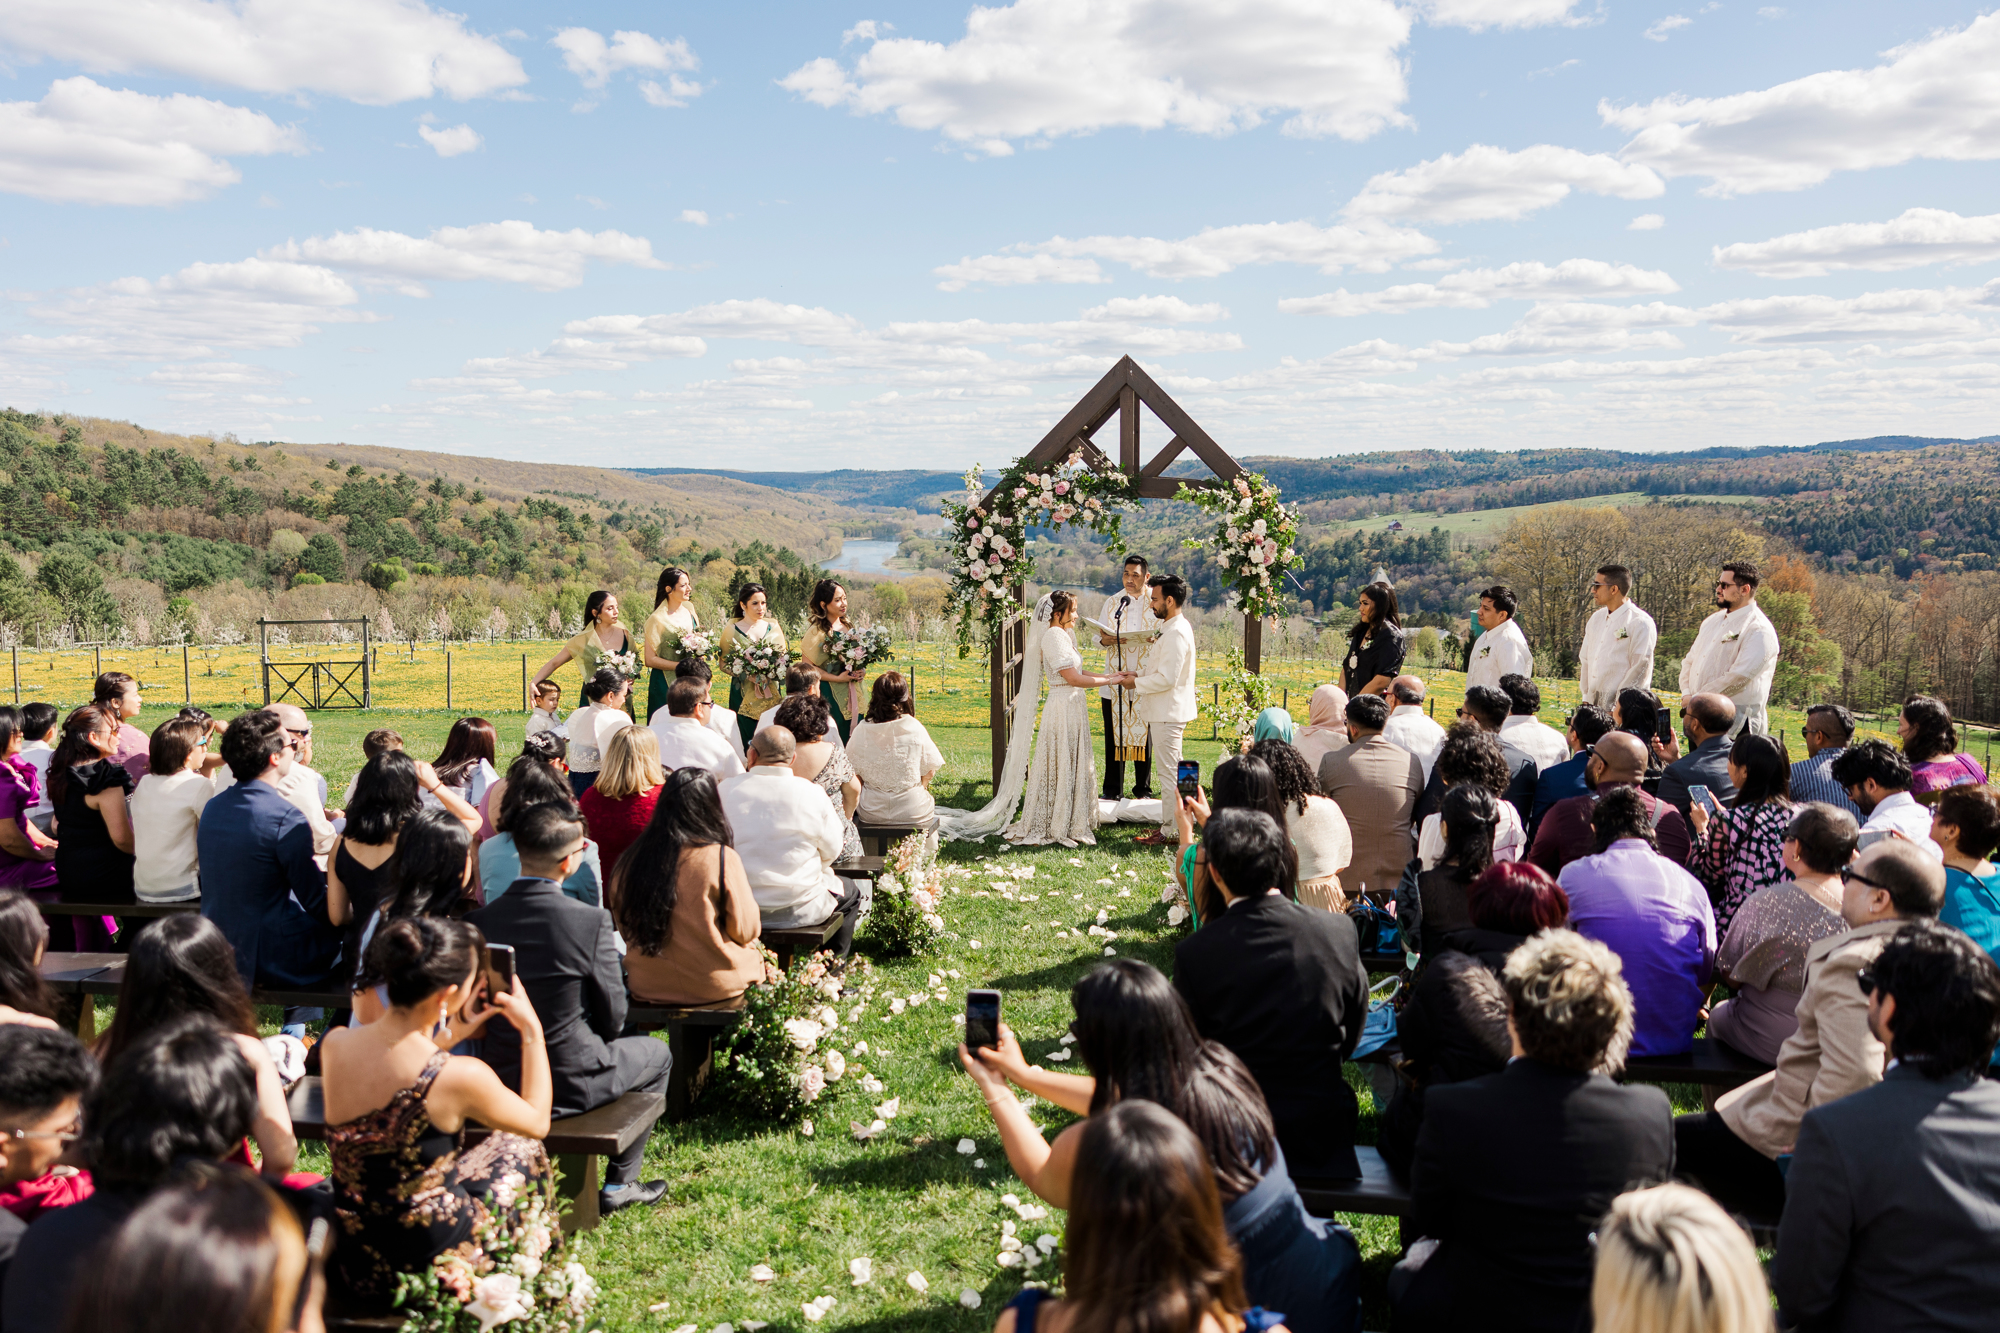 Heartfelt Seminary Hill Wedding in the Summertime